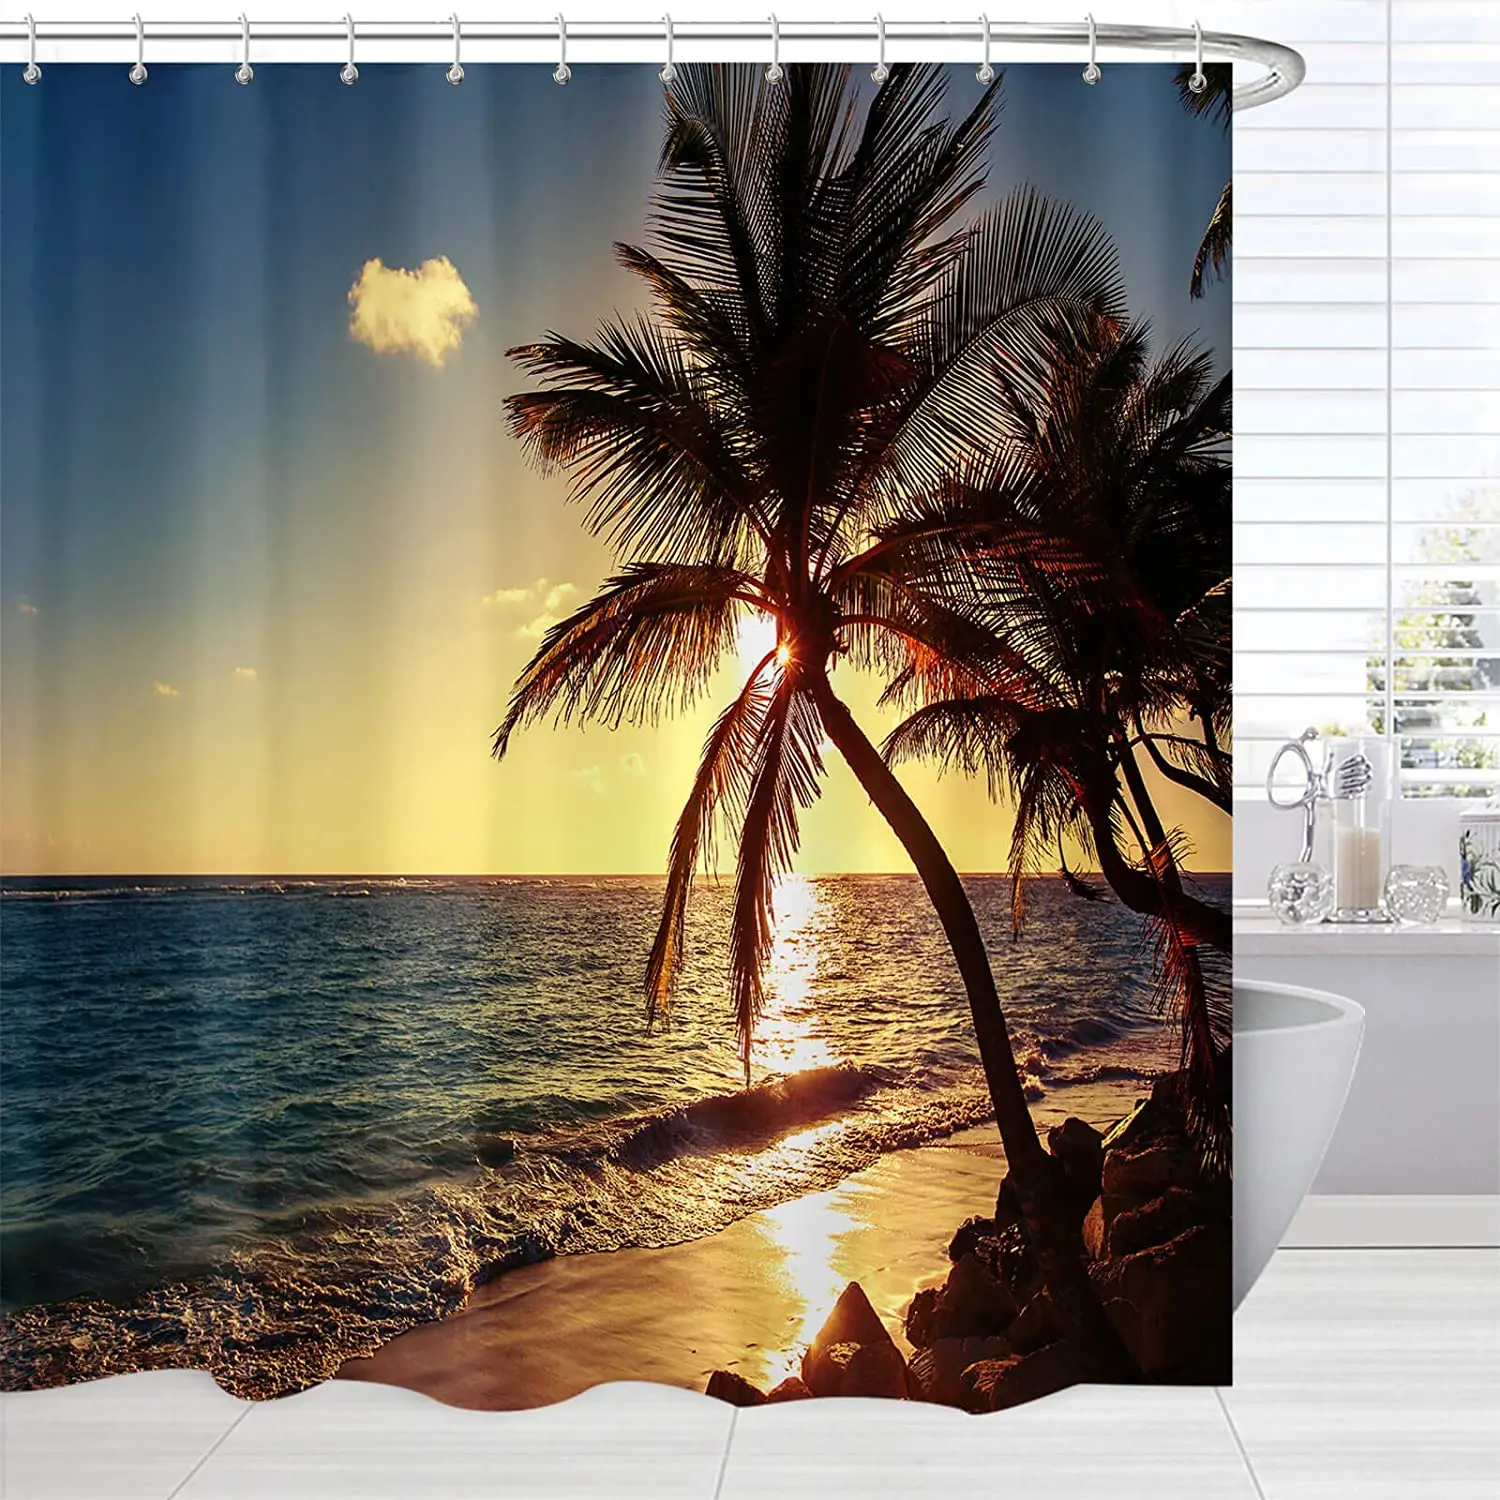 Bathroom Waterproof Fabric Shower Curtain Set Sunset Sky Cloud Sea Beach Scenic 